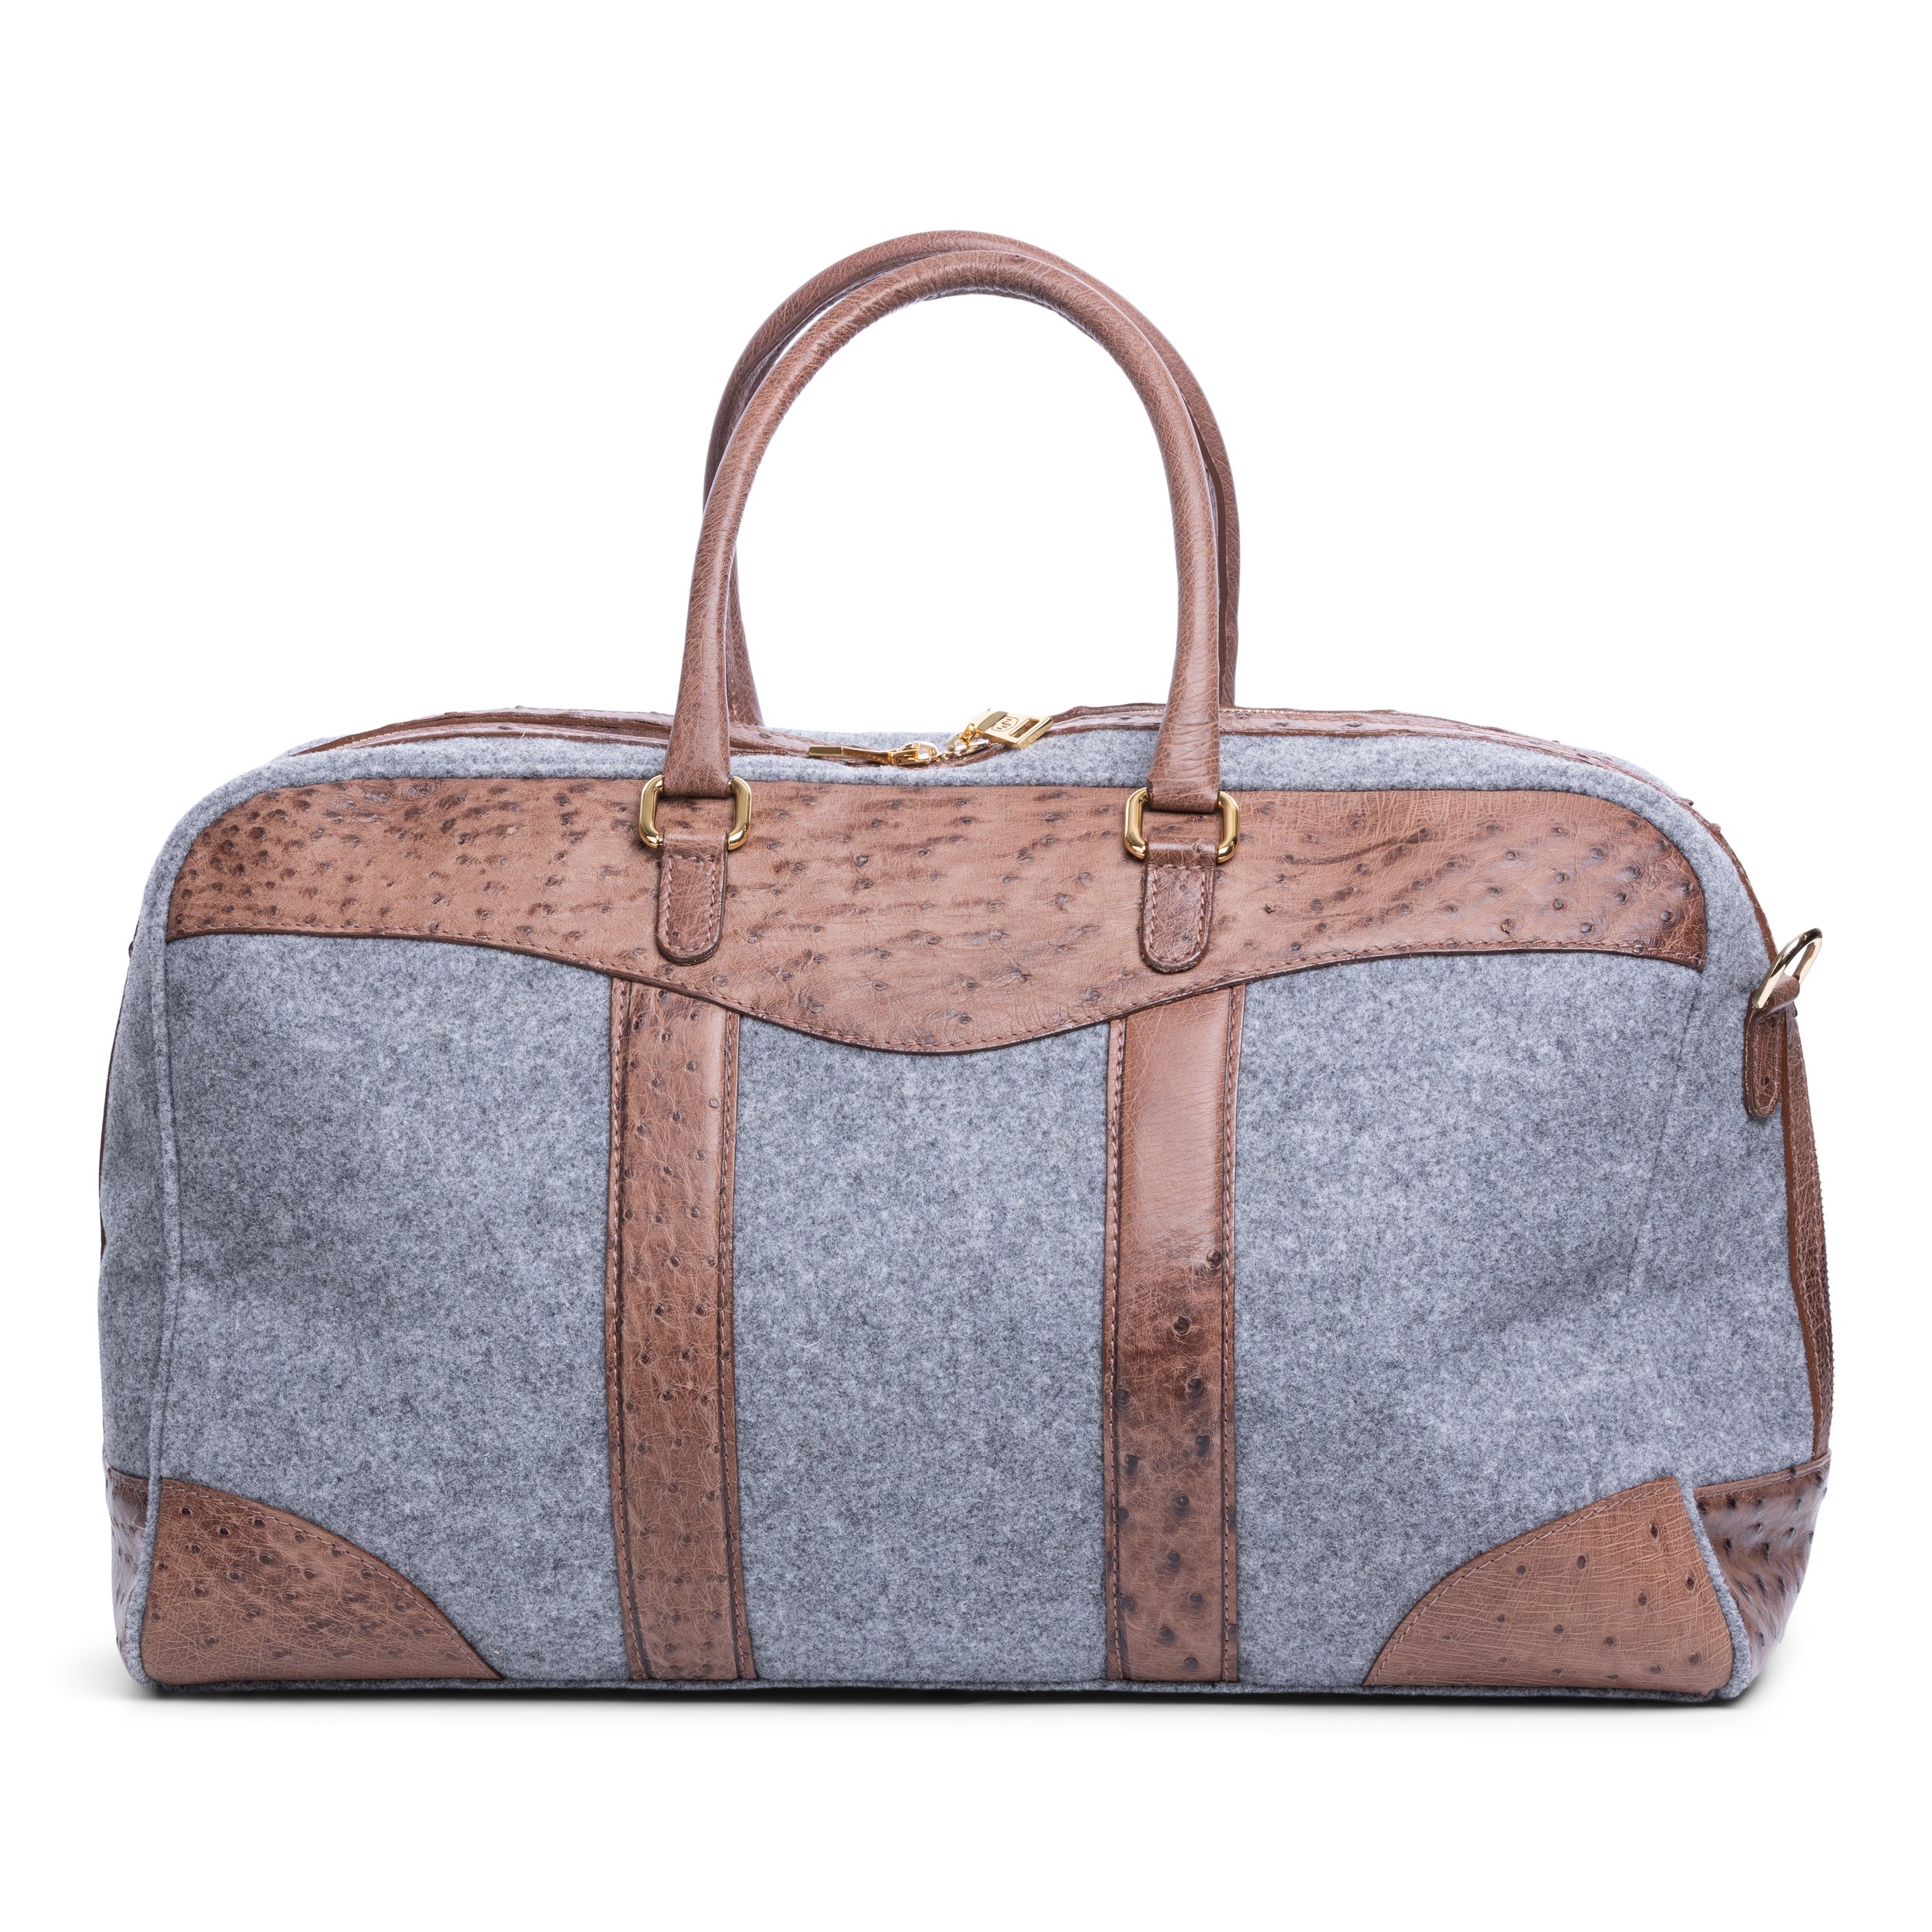 Bag Duffle Louis Vuitton Monogram Overnight Bag